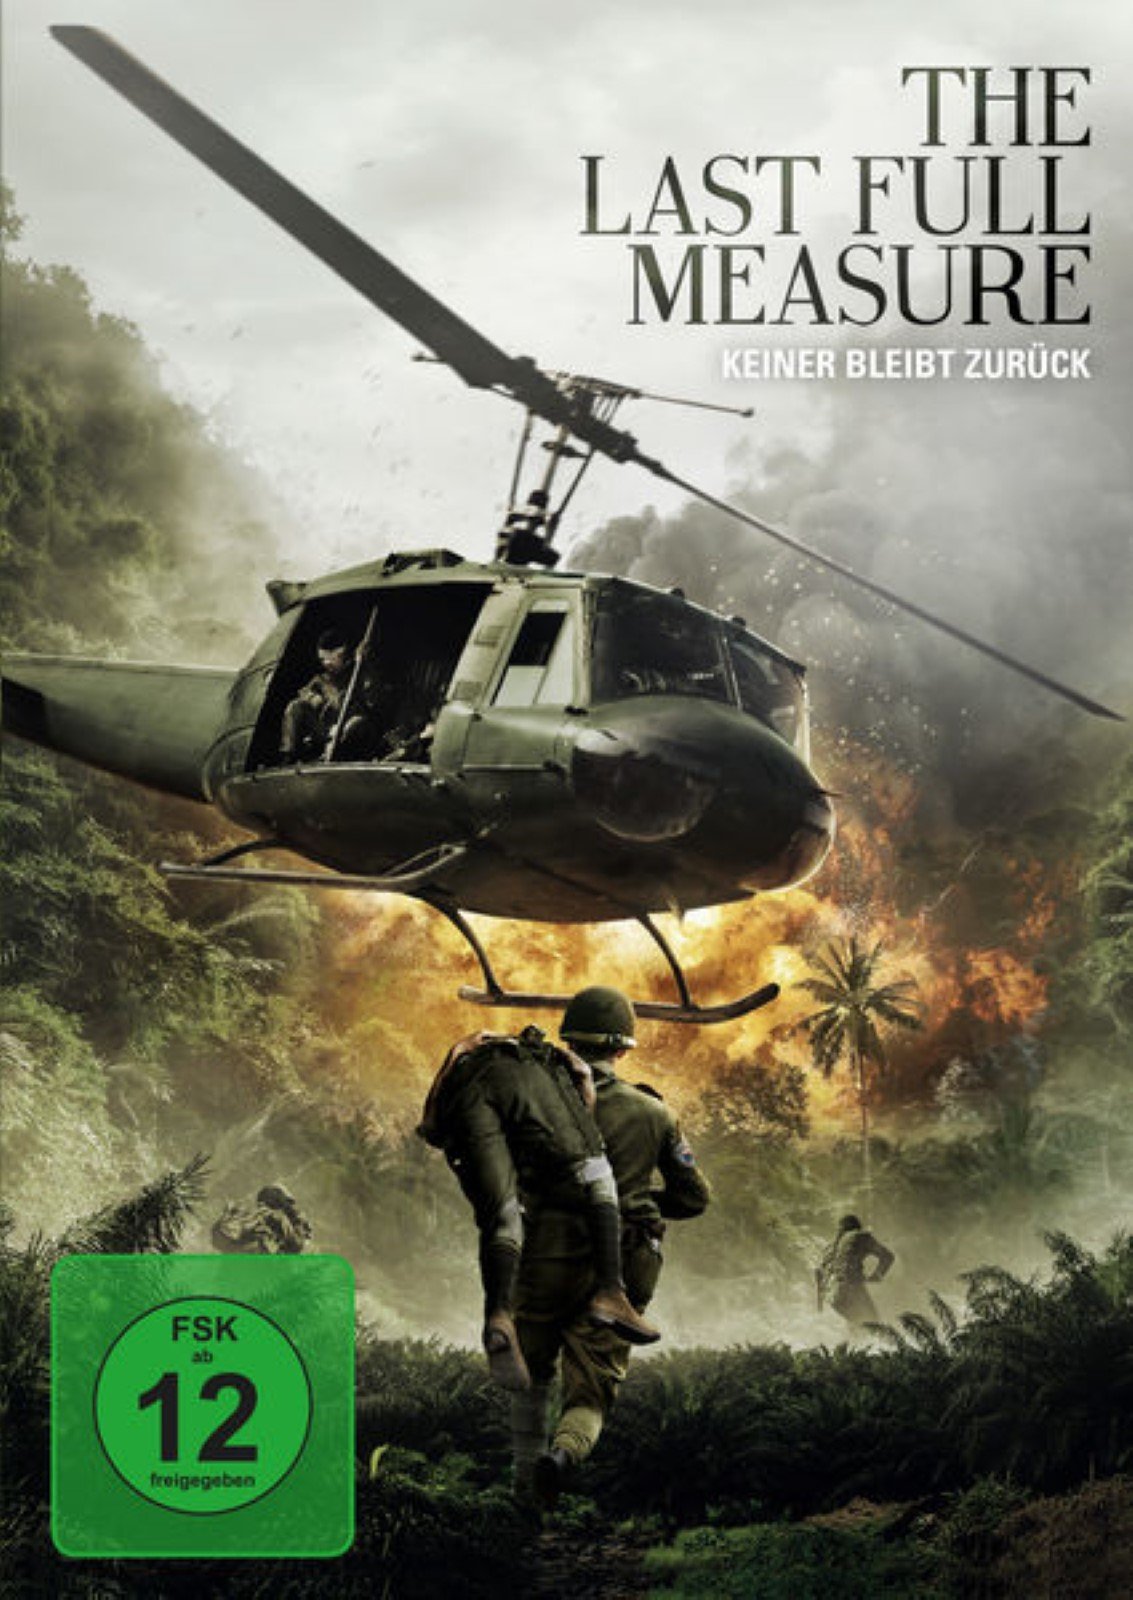 Kaufen online The Last Full Measure in DVD - FILMSTARTS.de1133 x 1600